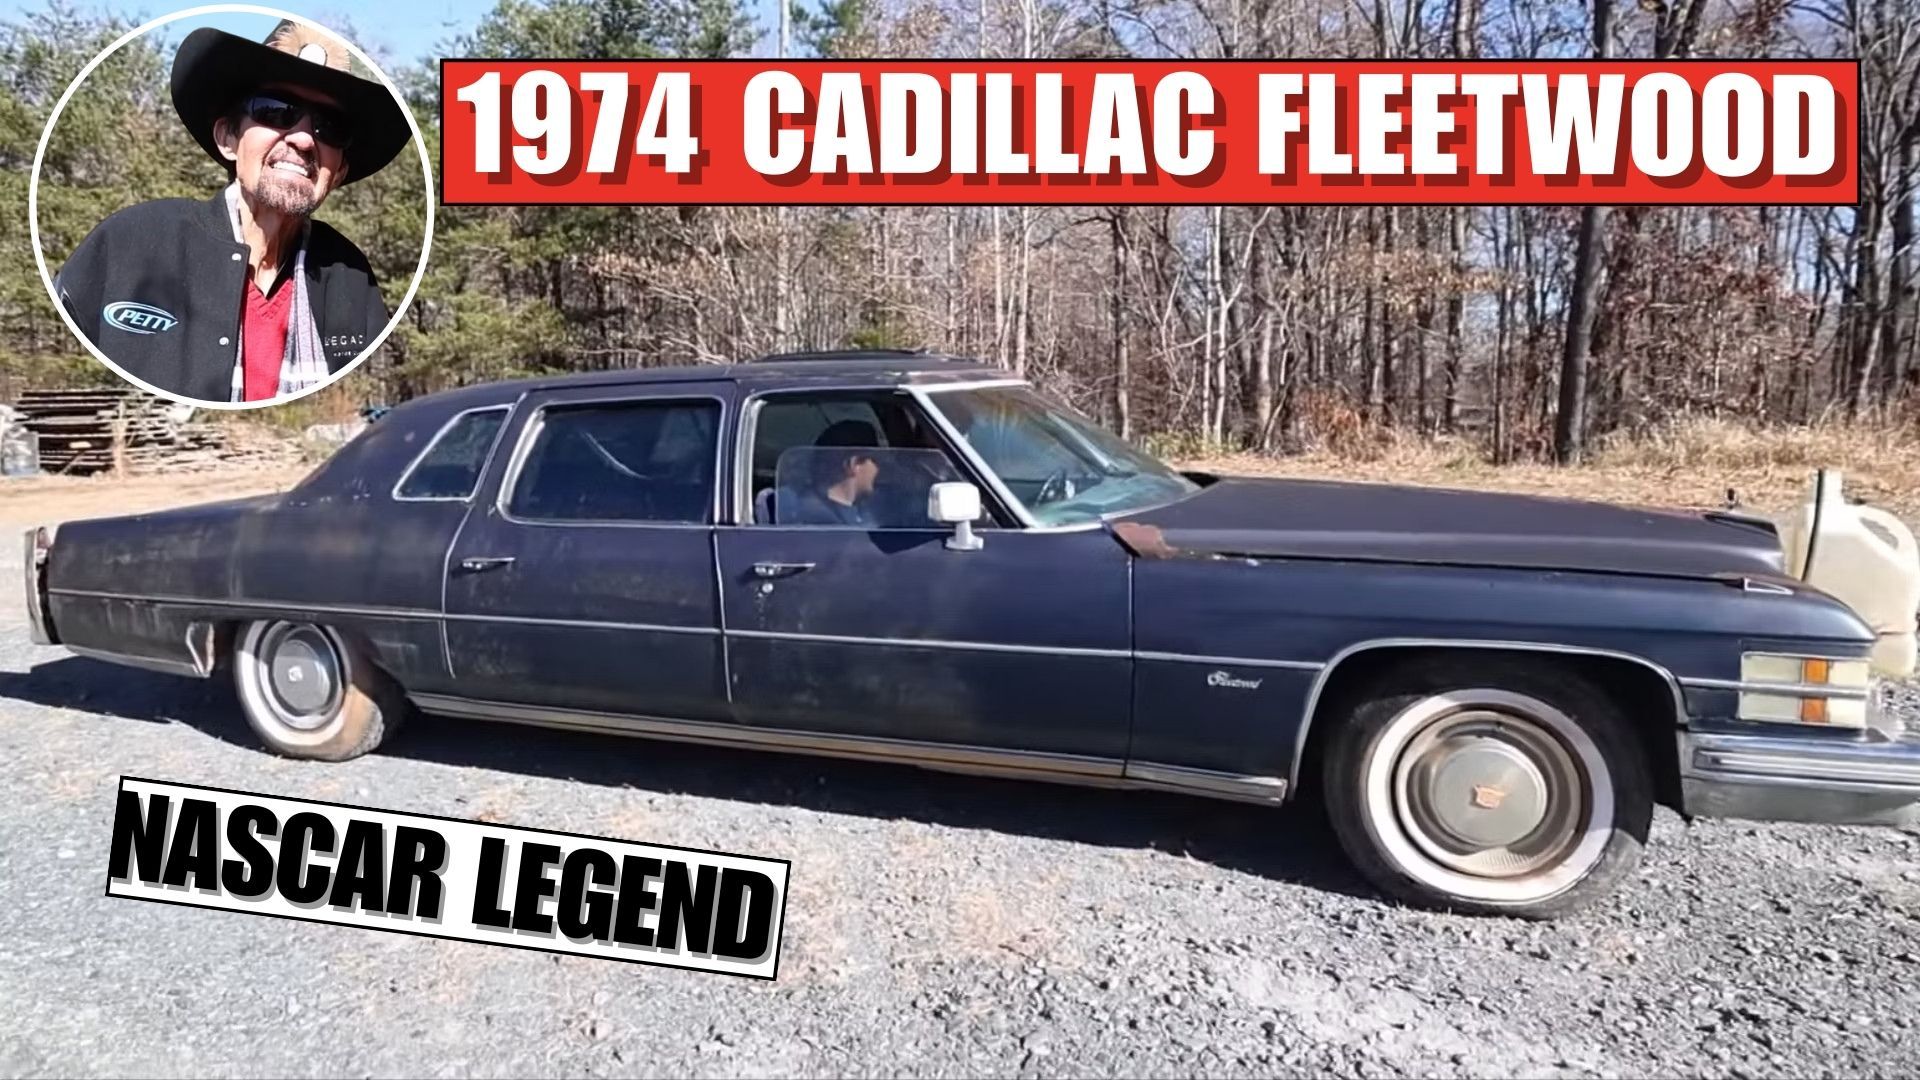 Richard Petty's 1974 Cadillac Fleetwood